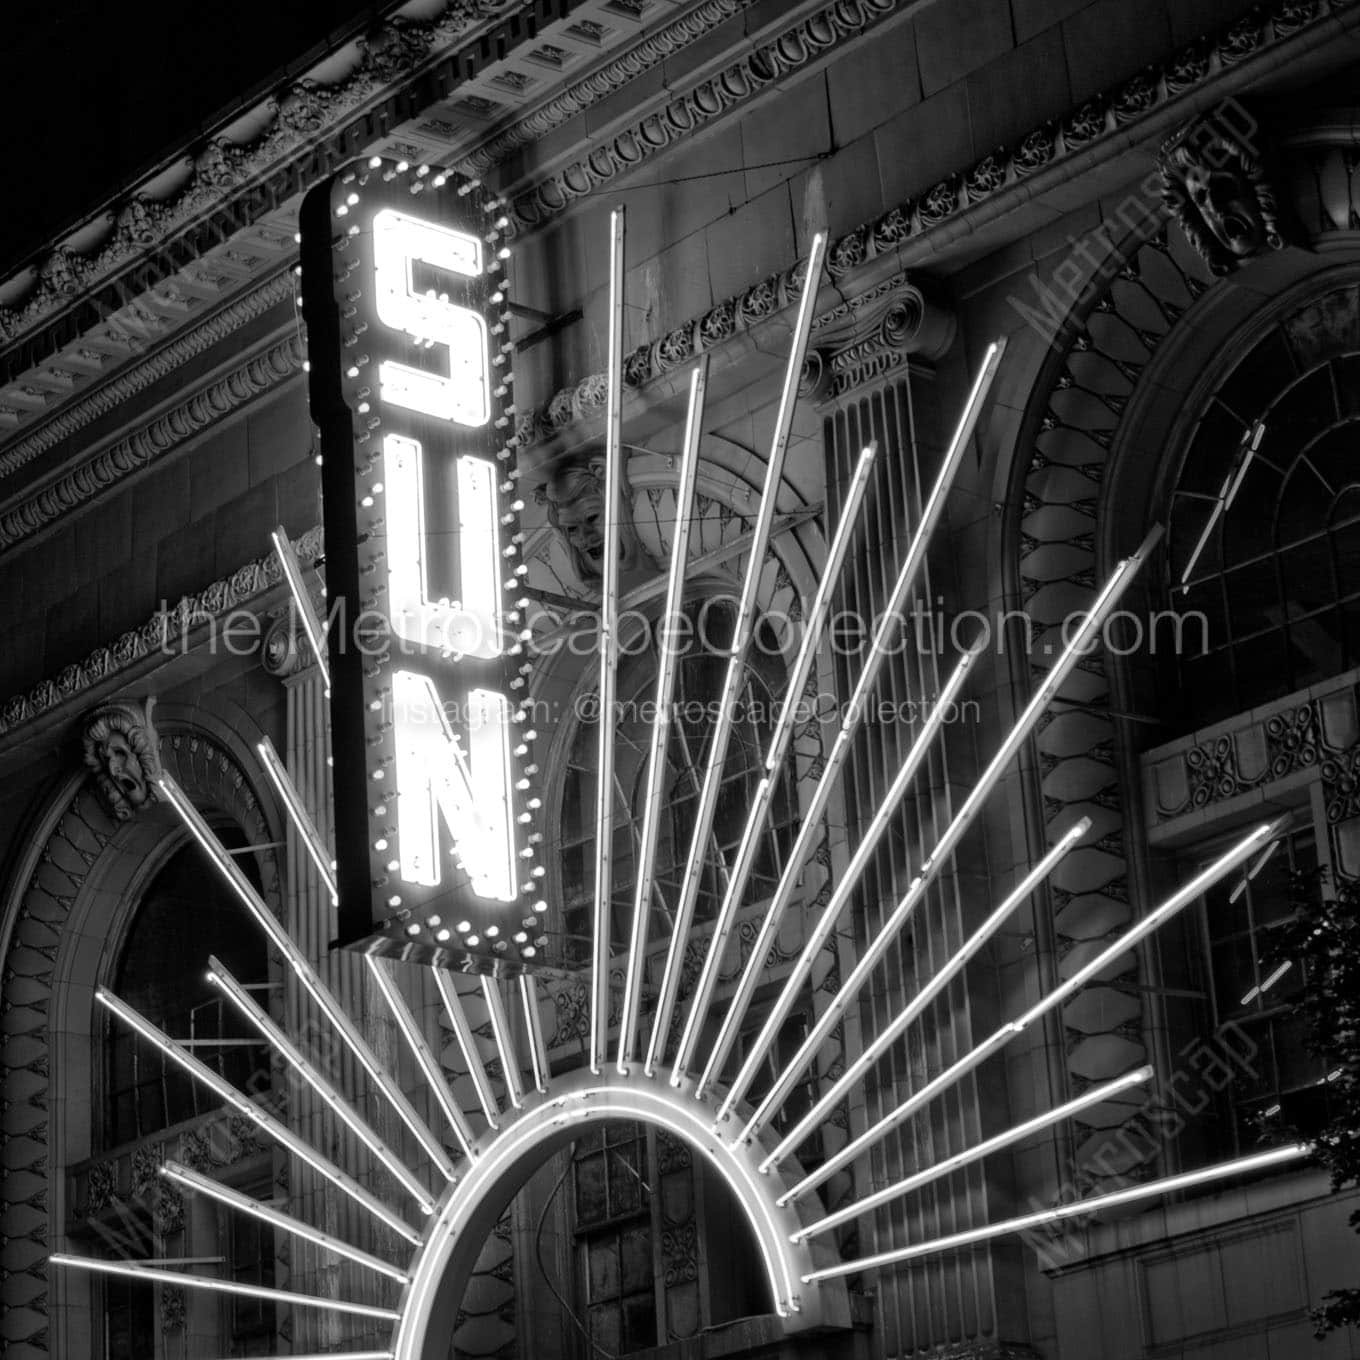 sun theater sign at night Black & White Office Art